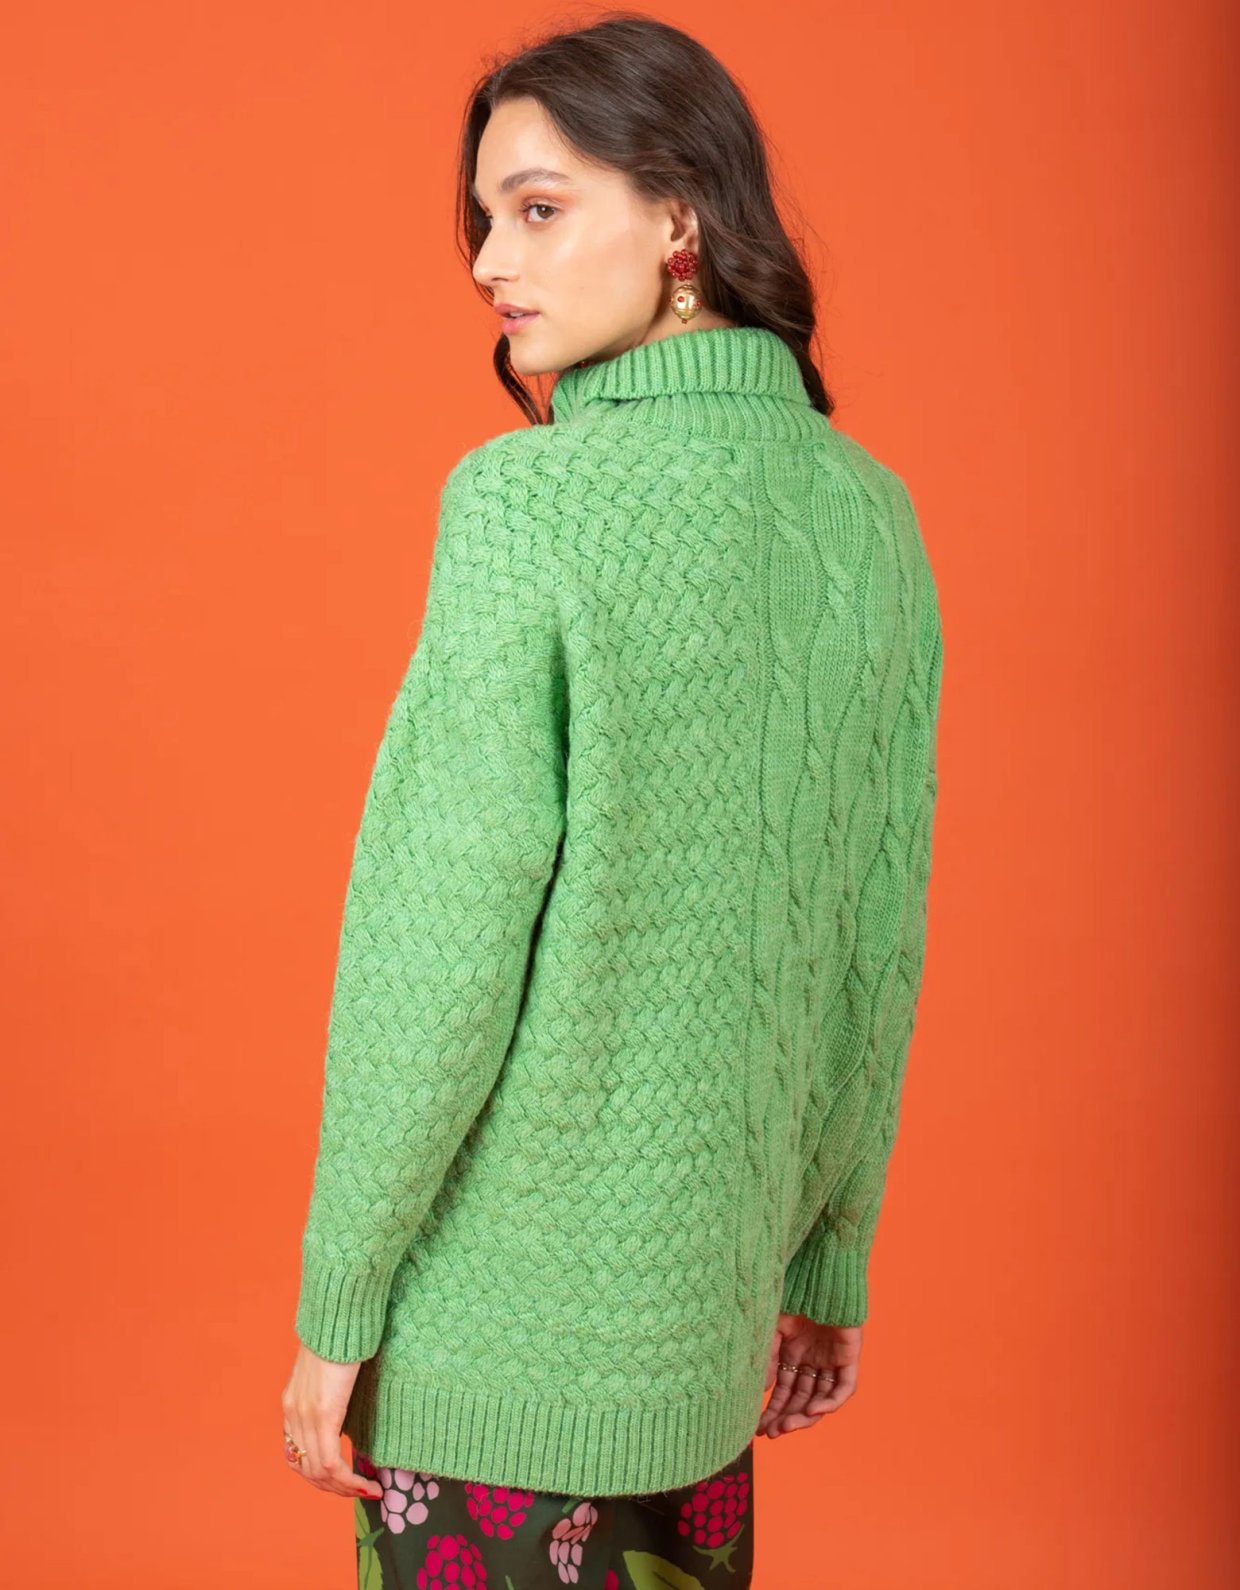 Chaton Chandler knit sweater green